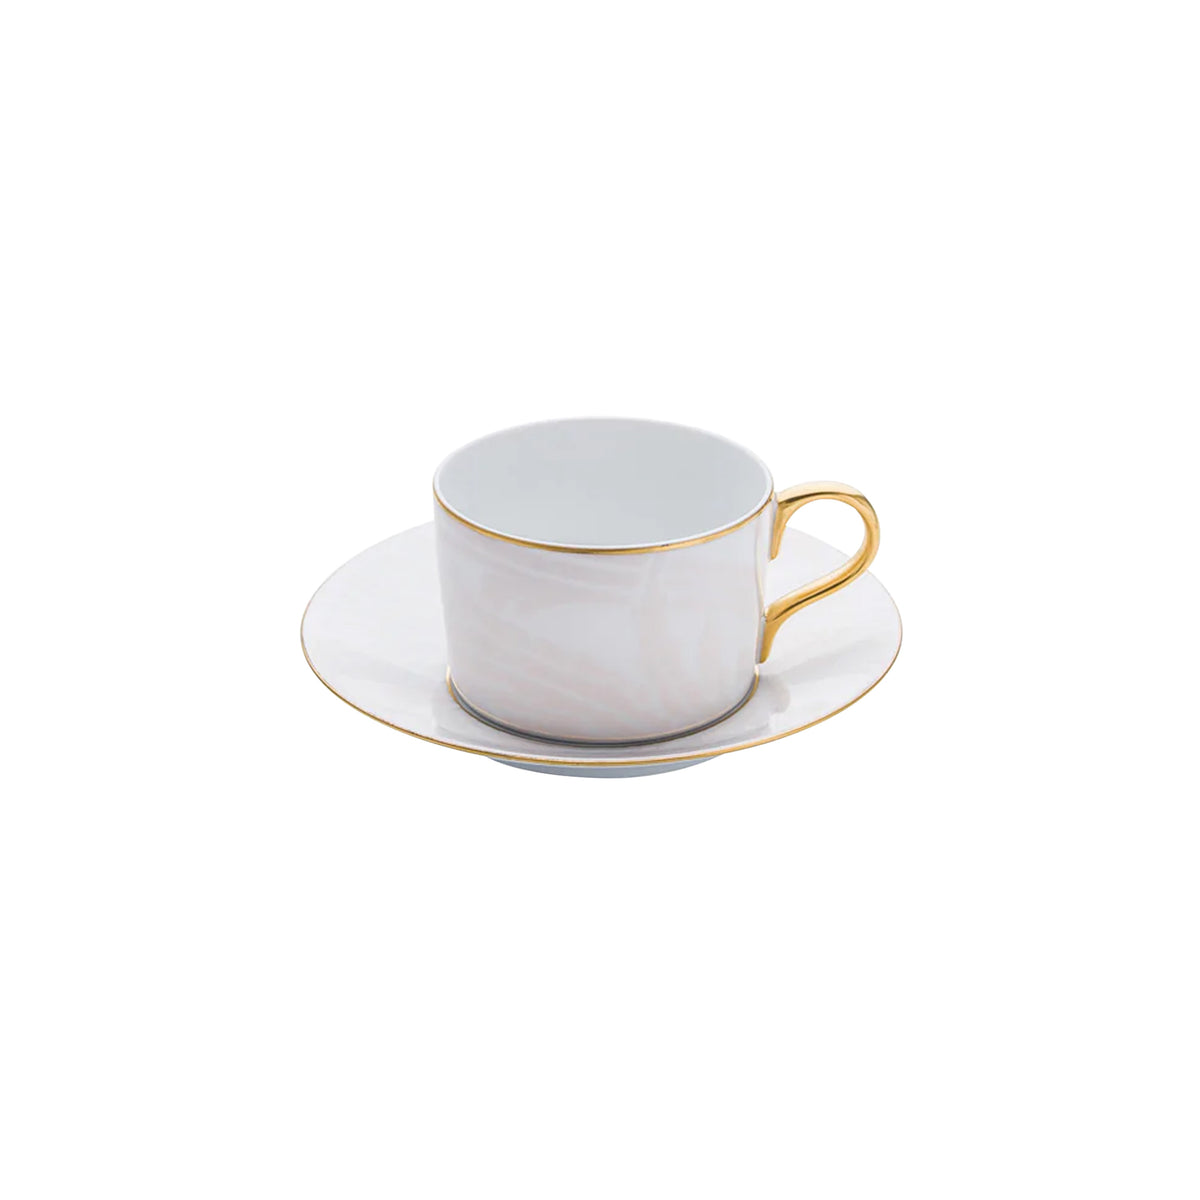 INDIAN POWDERED PINK GOLD NET - Tea set (cup & saucer)